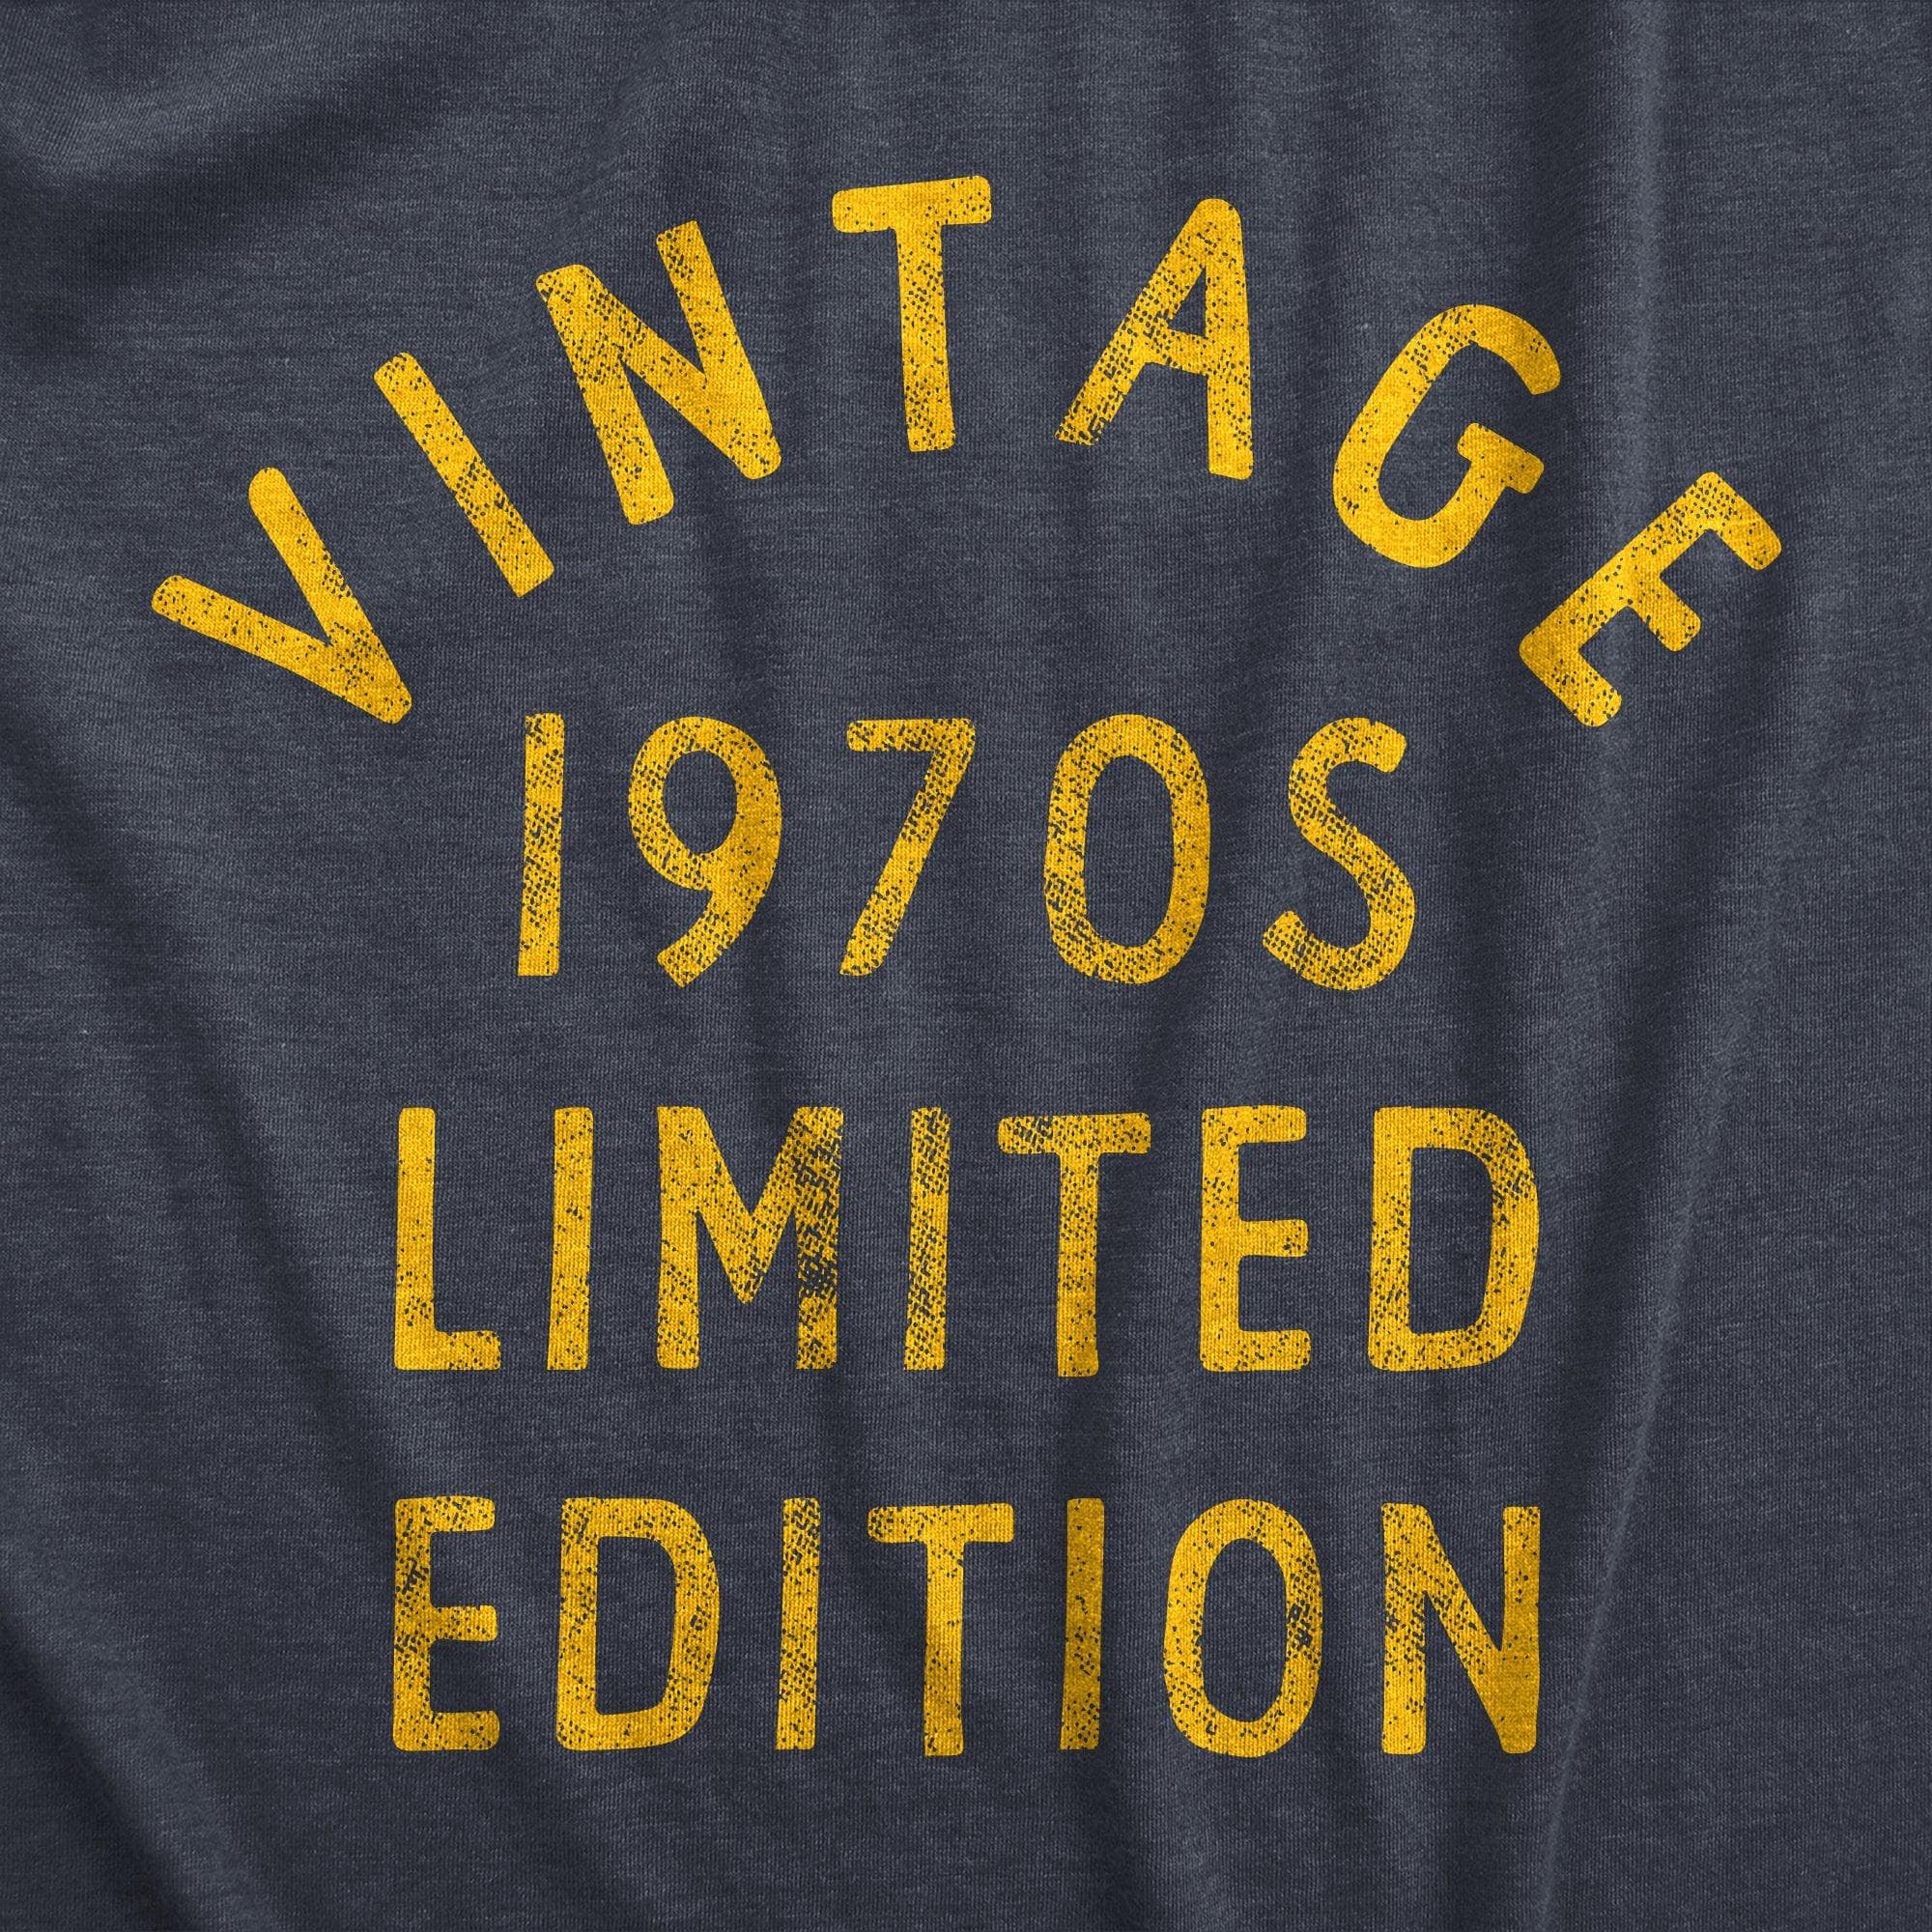 Vintage 1970s Limited Edition Men's Tshirt  -  Crazy Dog T-Shirts